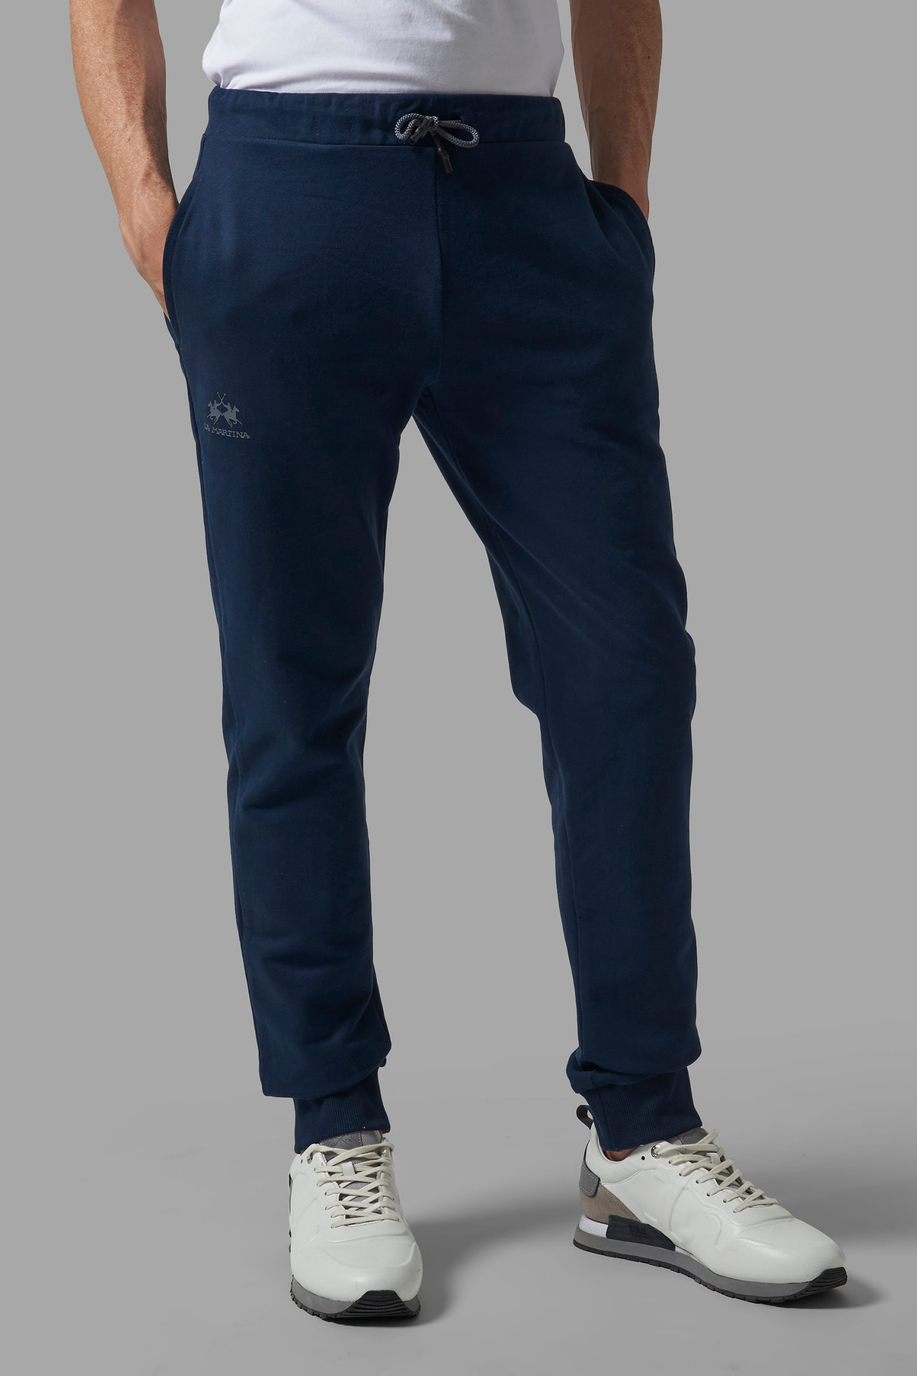 Pantalone da uomo regular fit - no sale permanent | La Martina - Official Online Shop